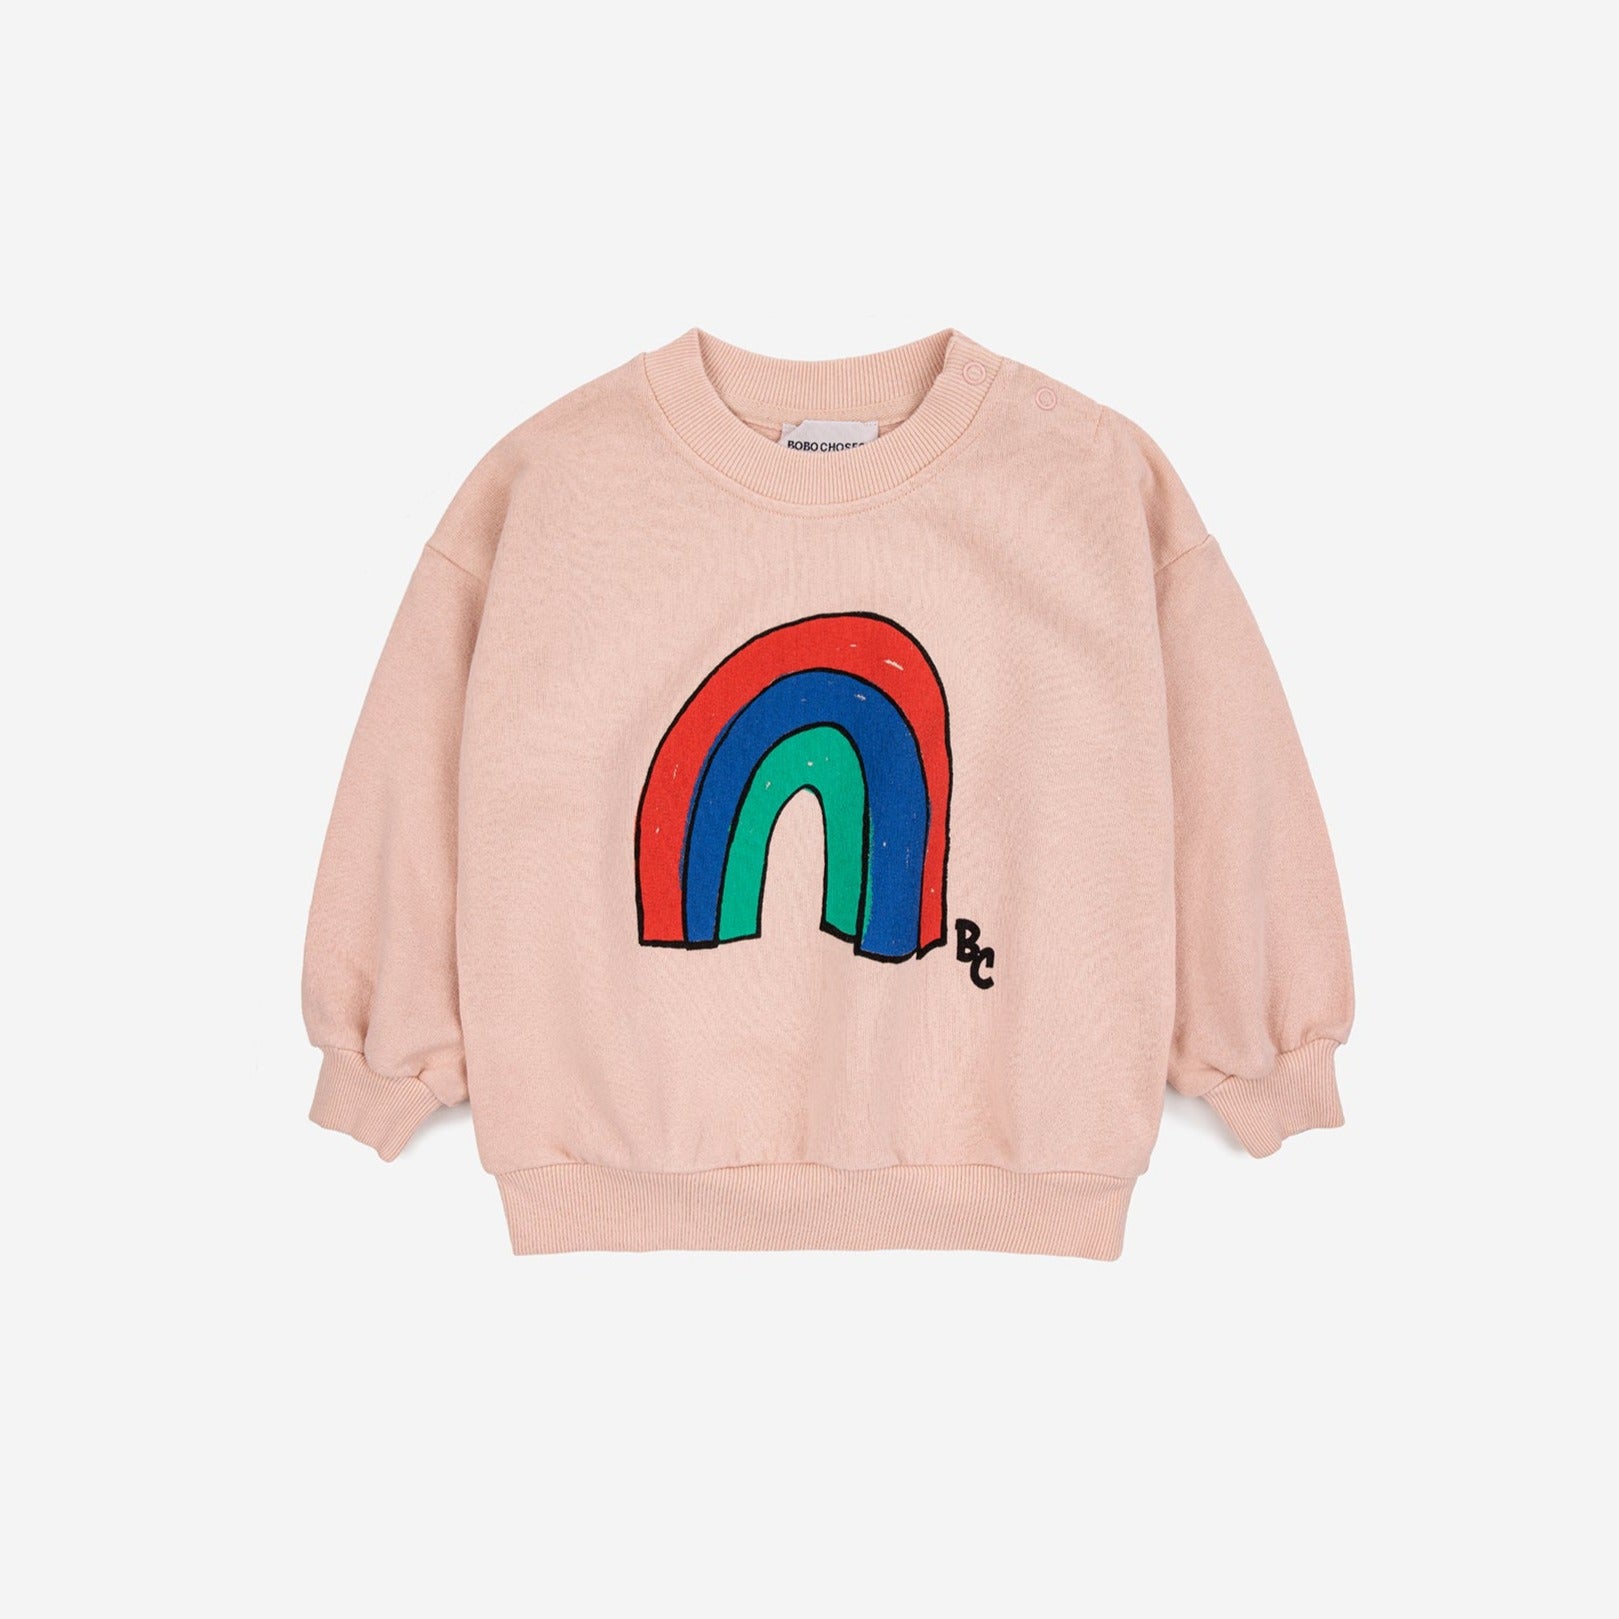 BOBO CHOSES /  Rainbow sweatshirt, BABY